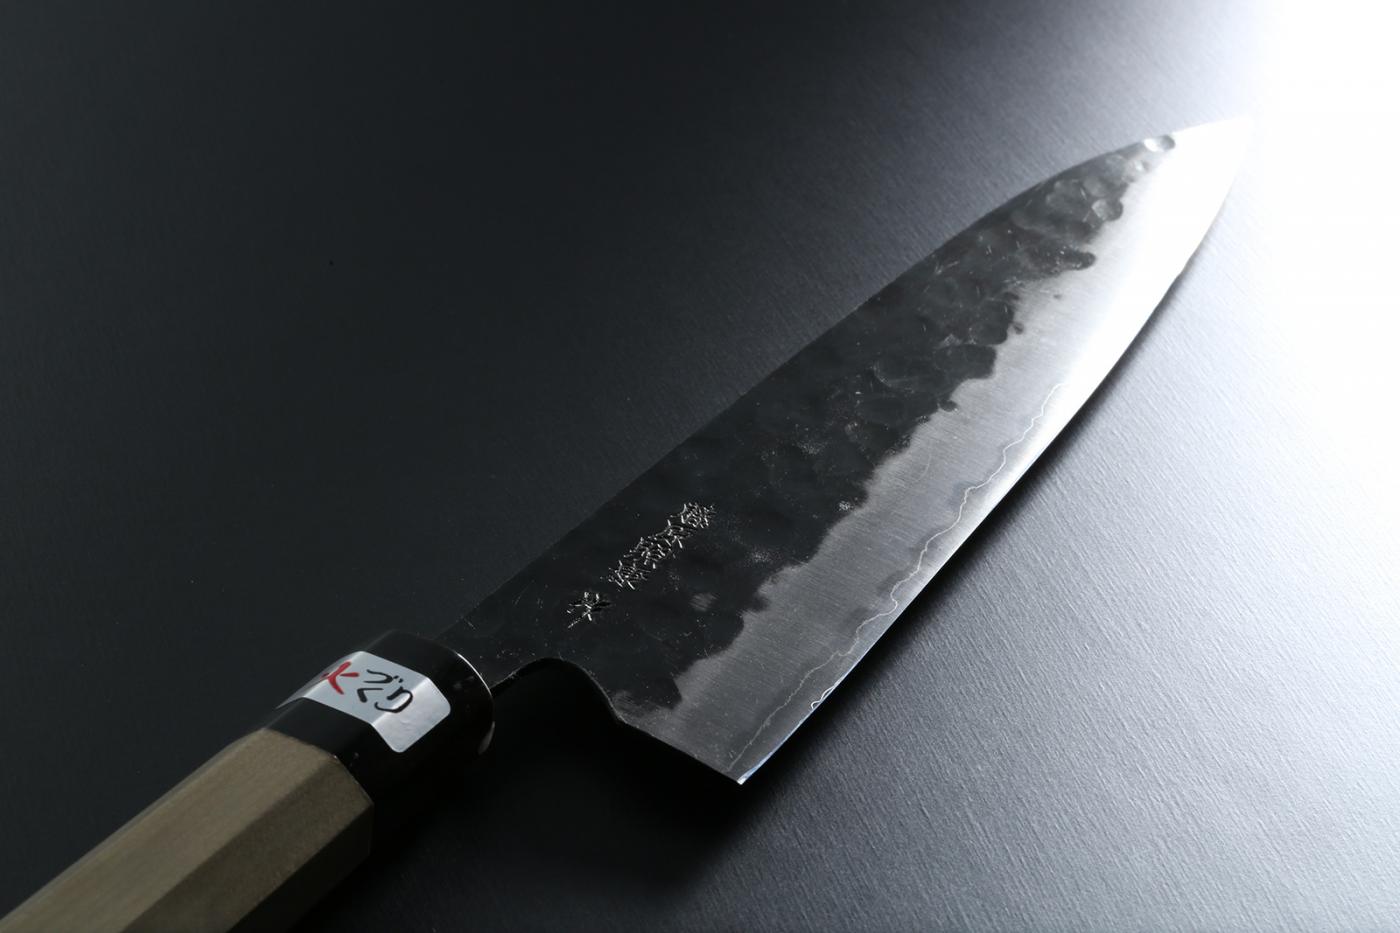 Gyuto knife [Denka] + Octagonal handle with buffalo horn ferrule